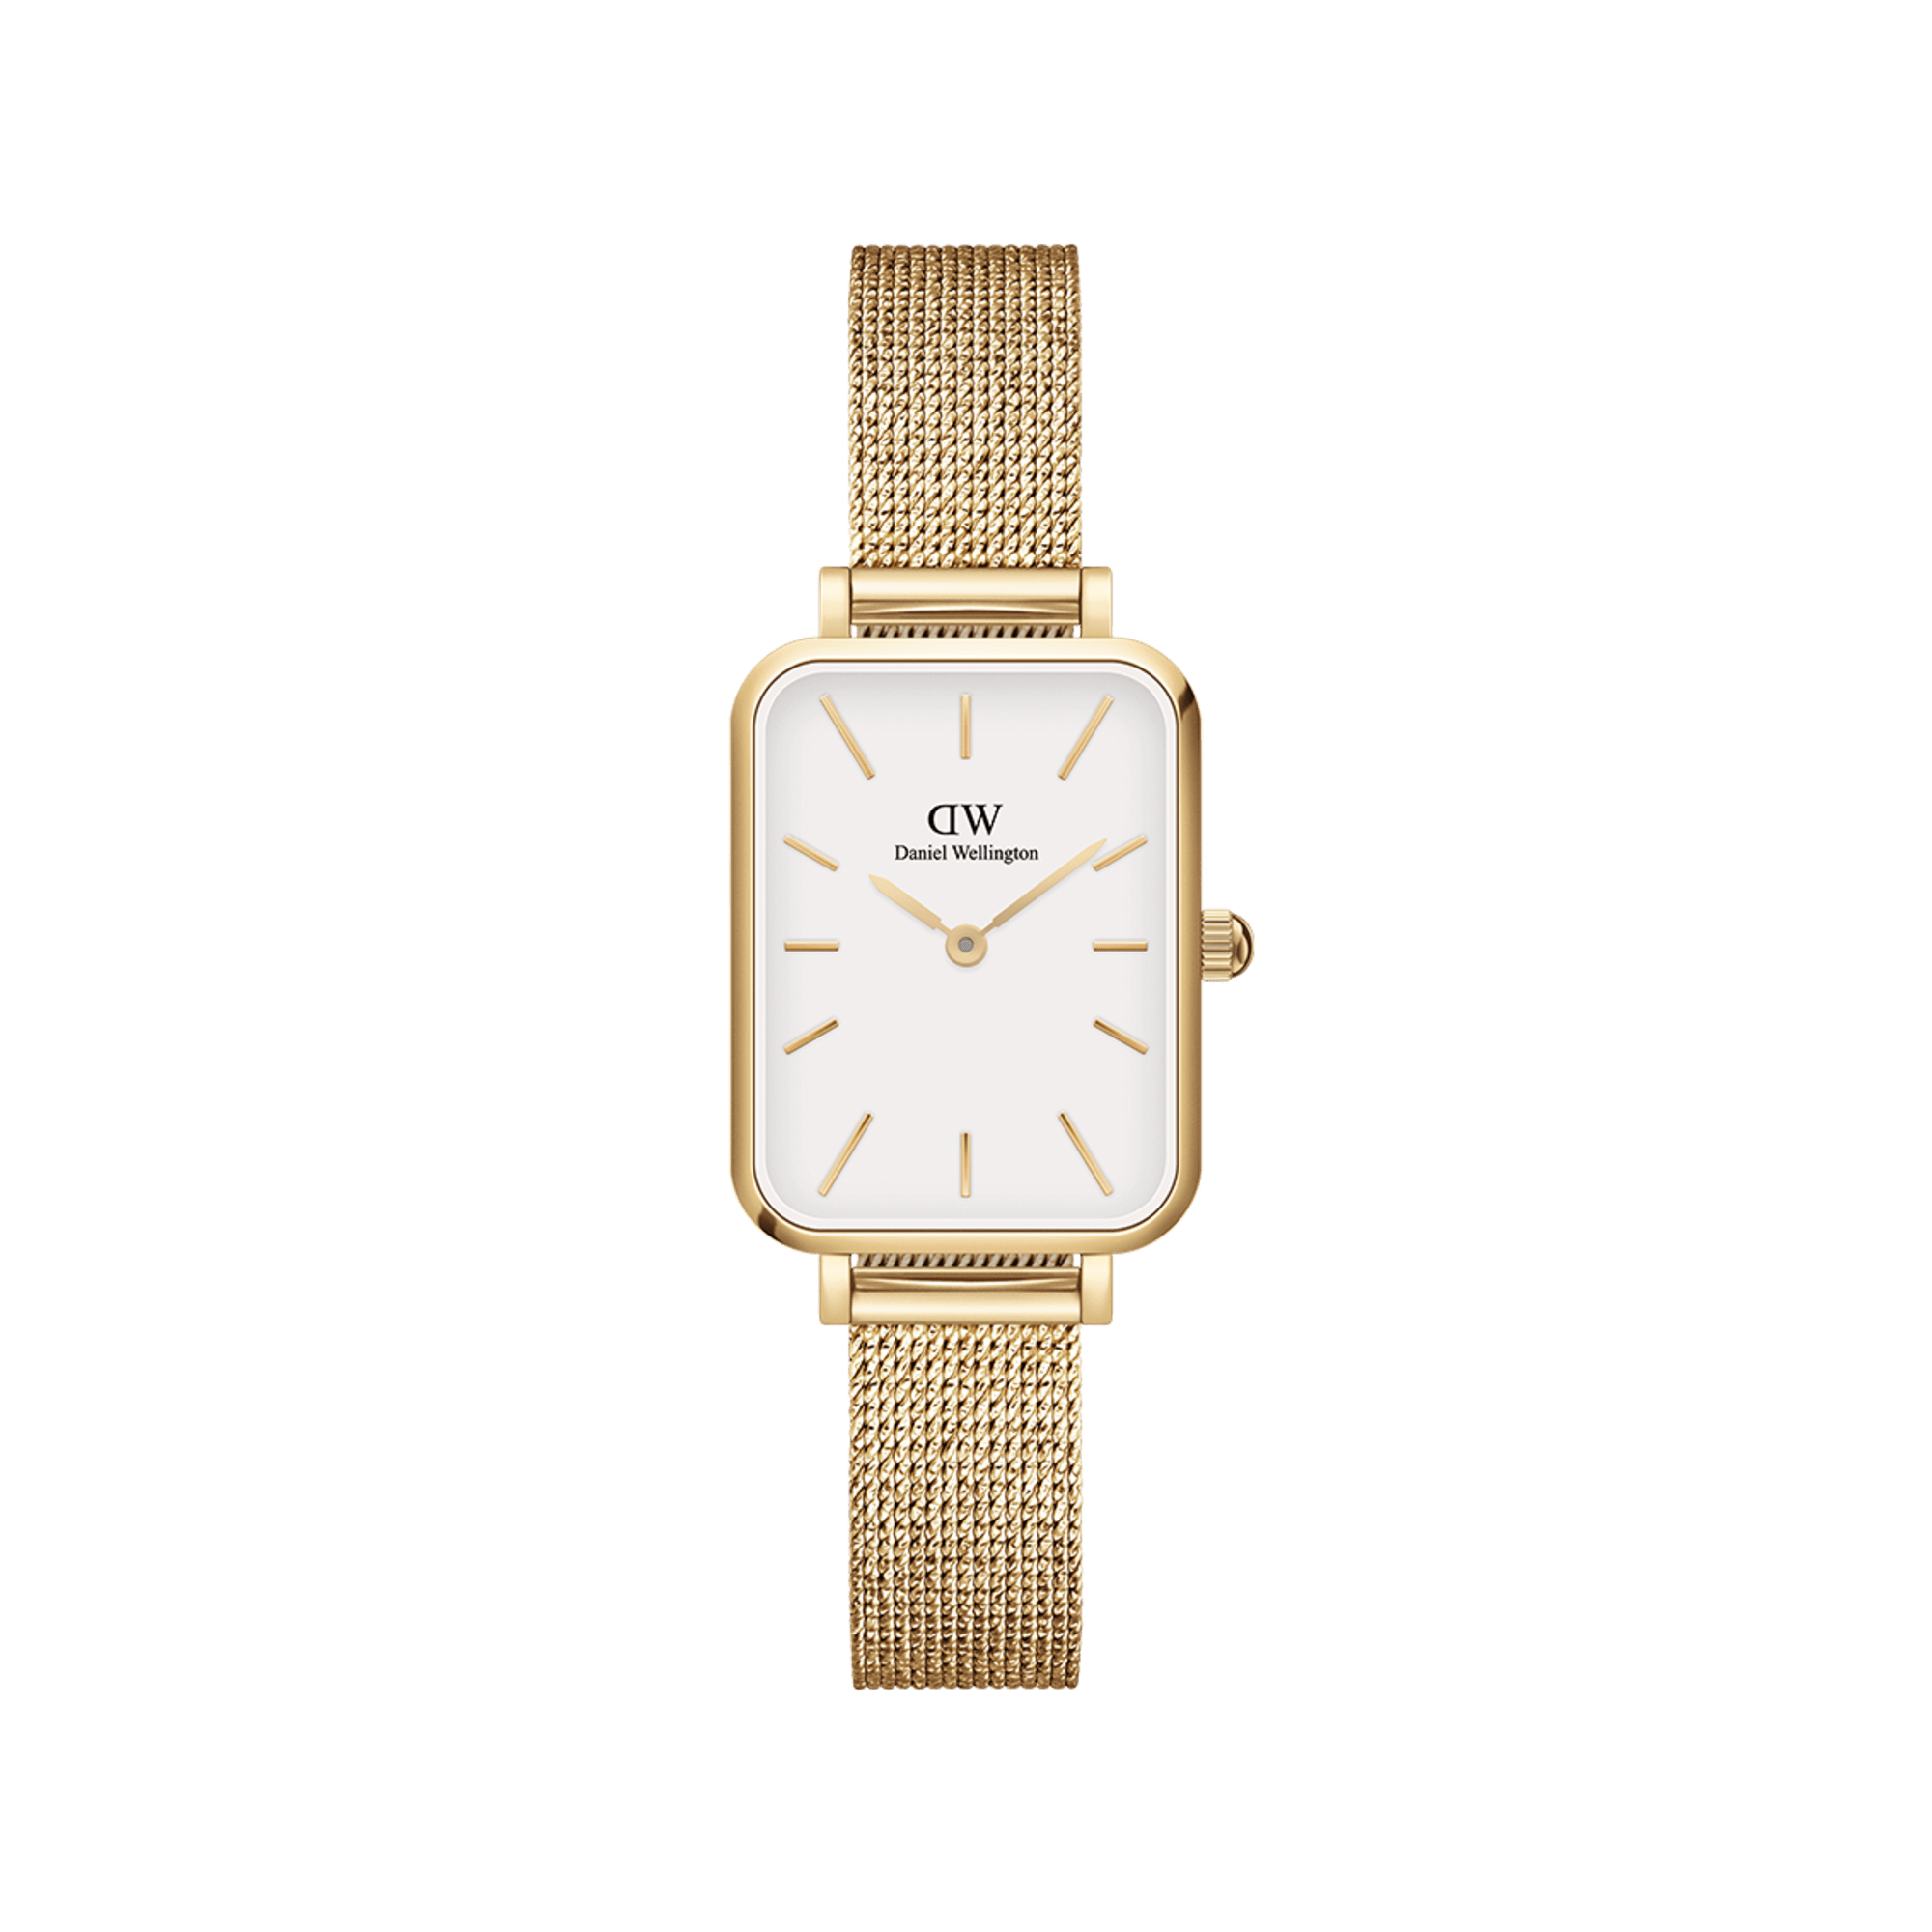 Vervullen Definitie Luchtvaart Quadro Pressed Evergold - Gold Women's Watch | DW – Daniel Wellington Global